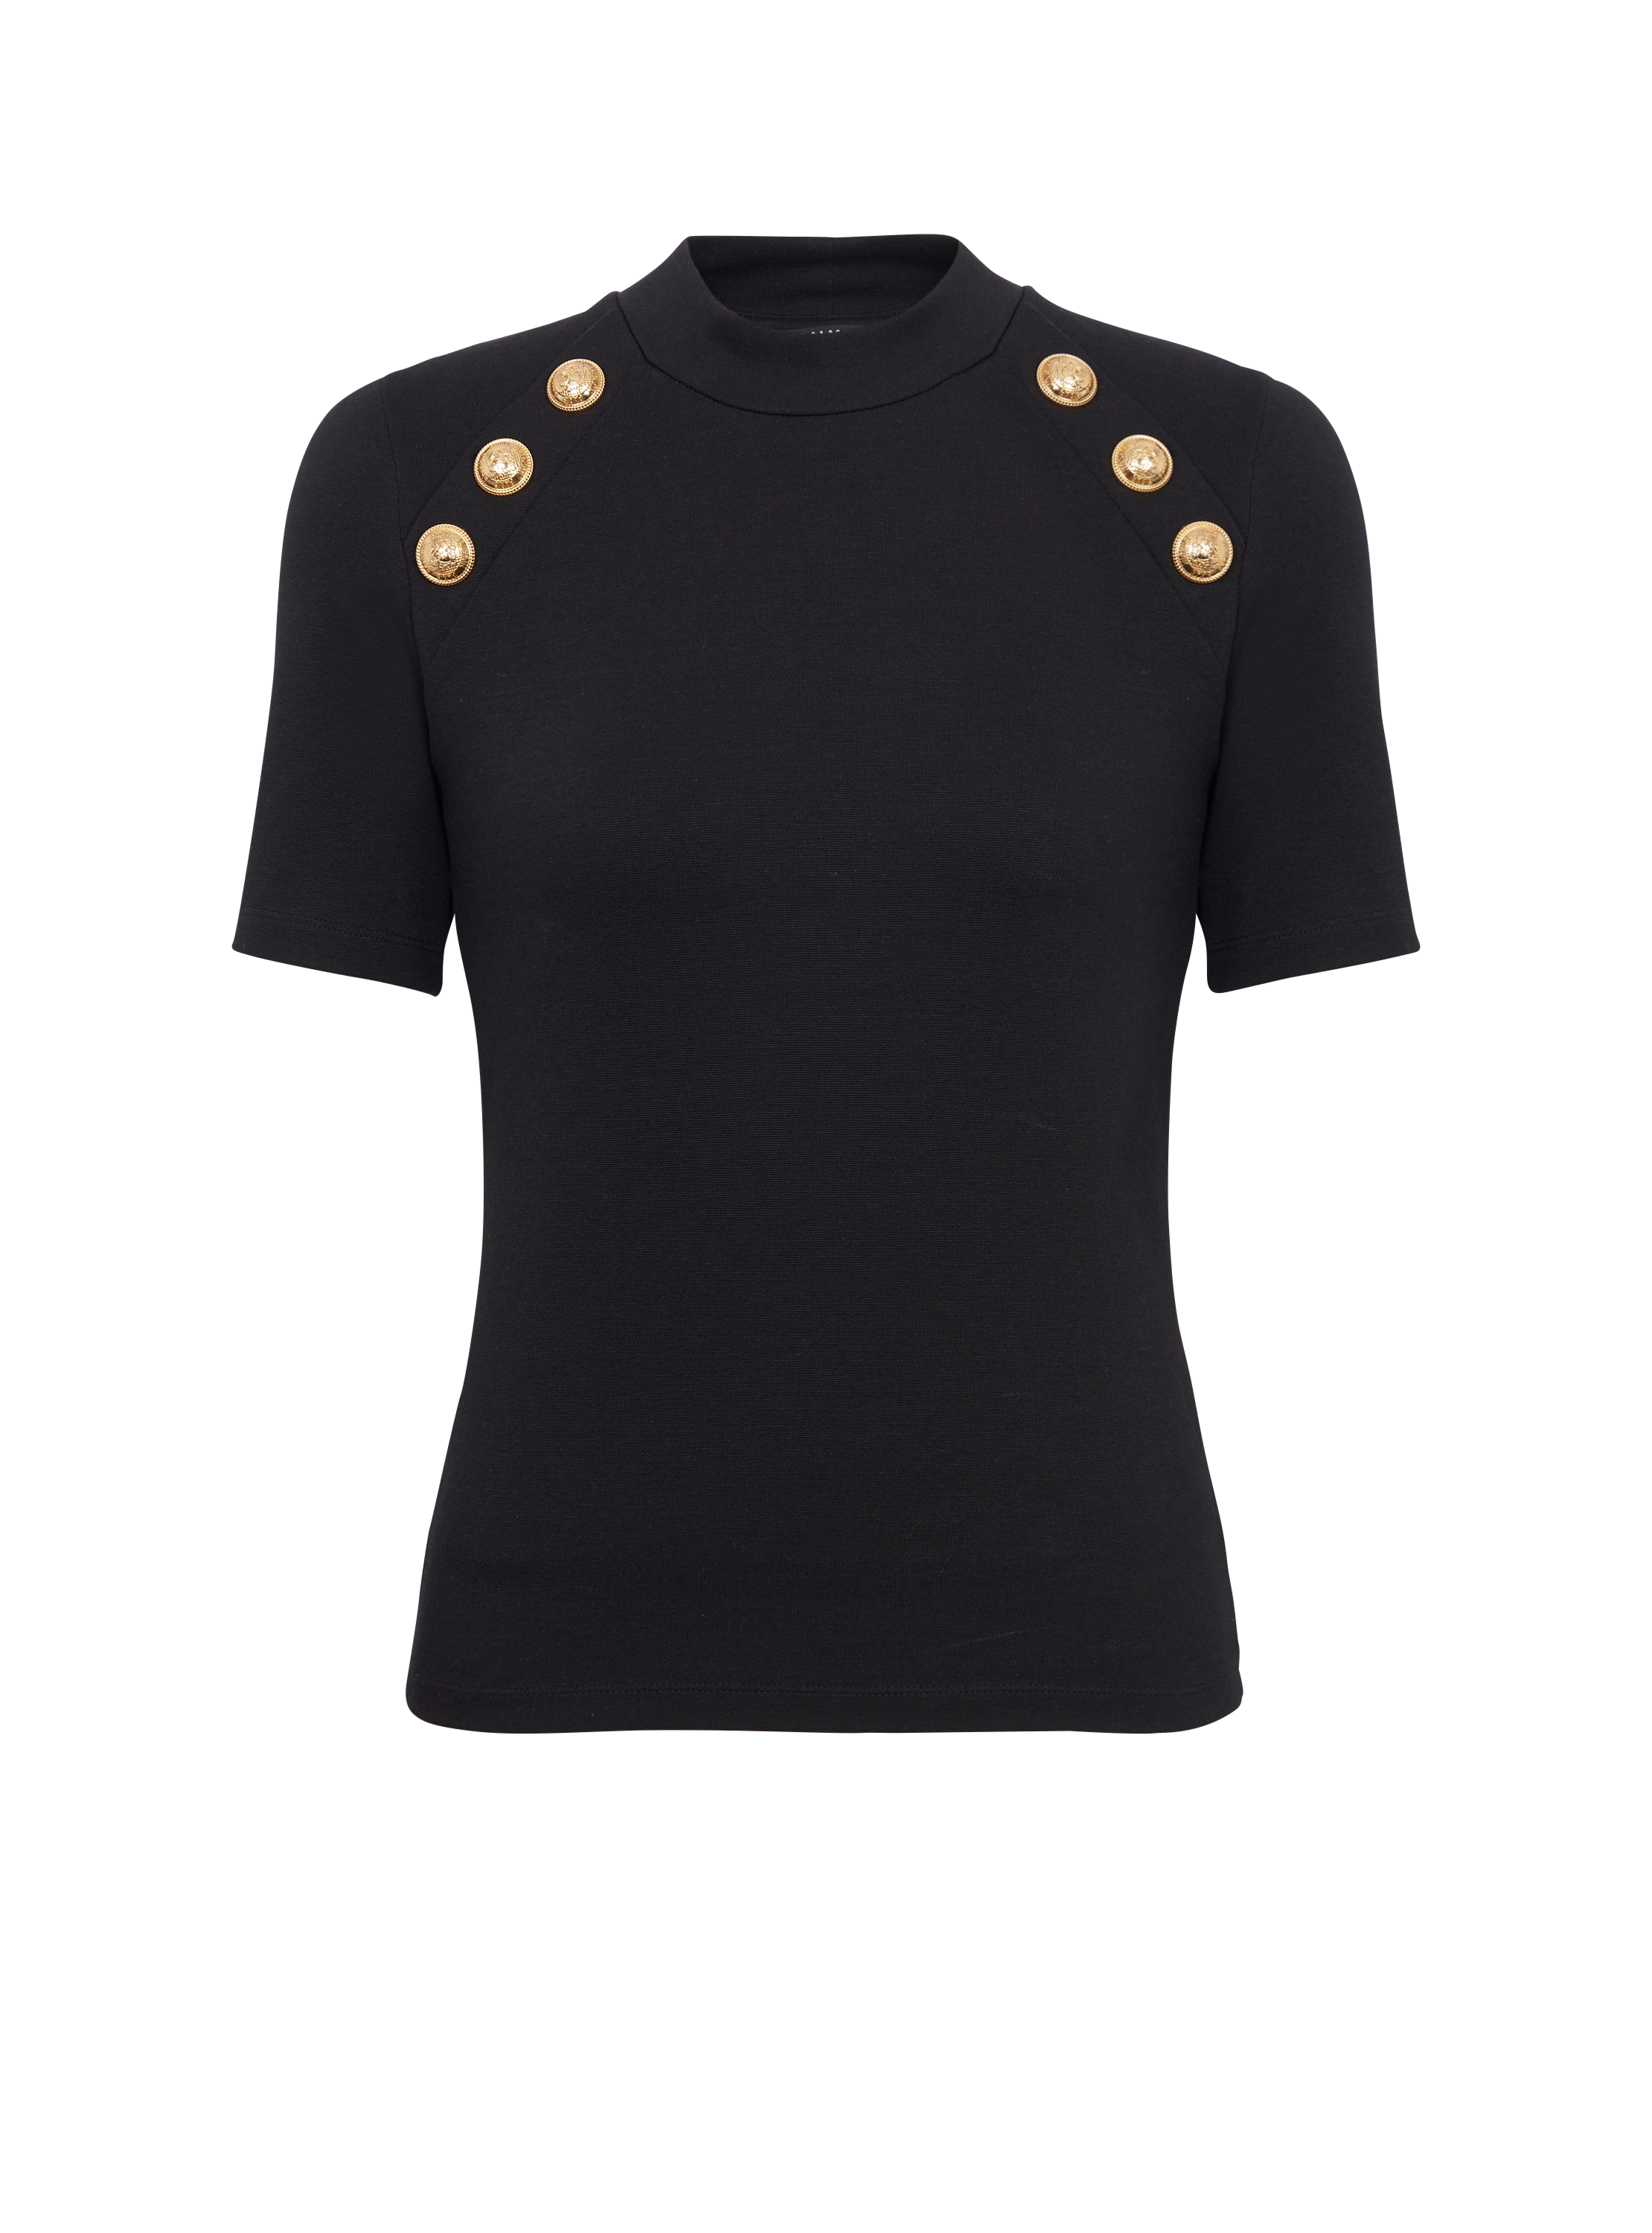 6-button knit T-shirt black - Women